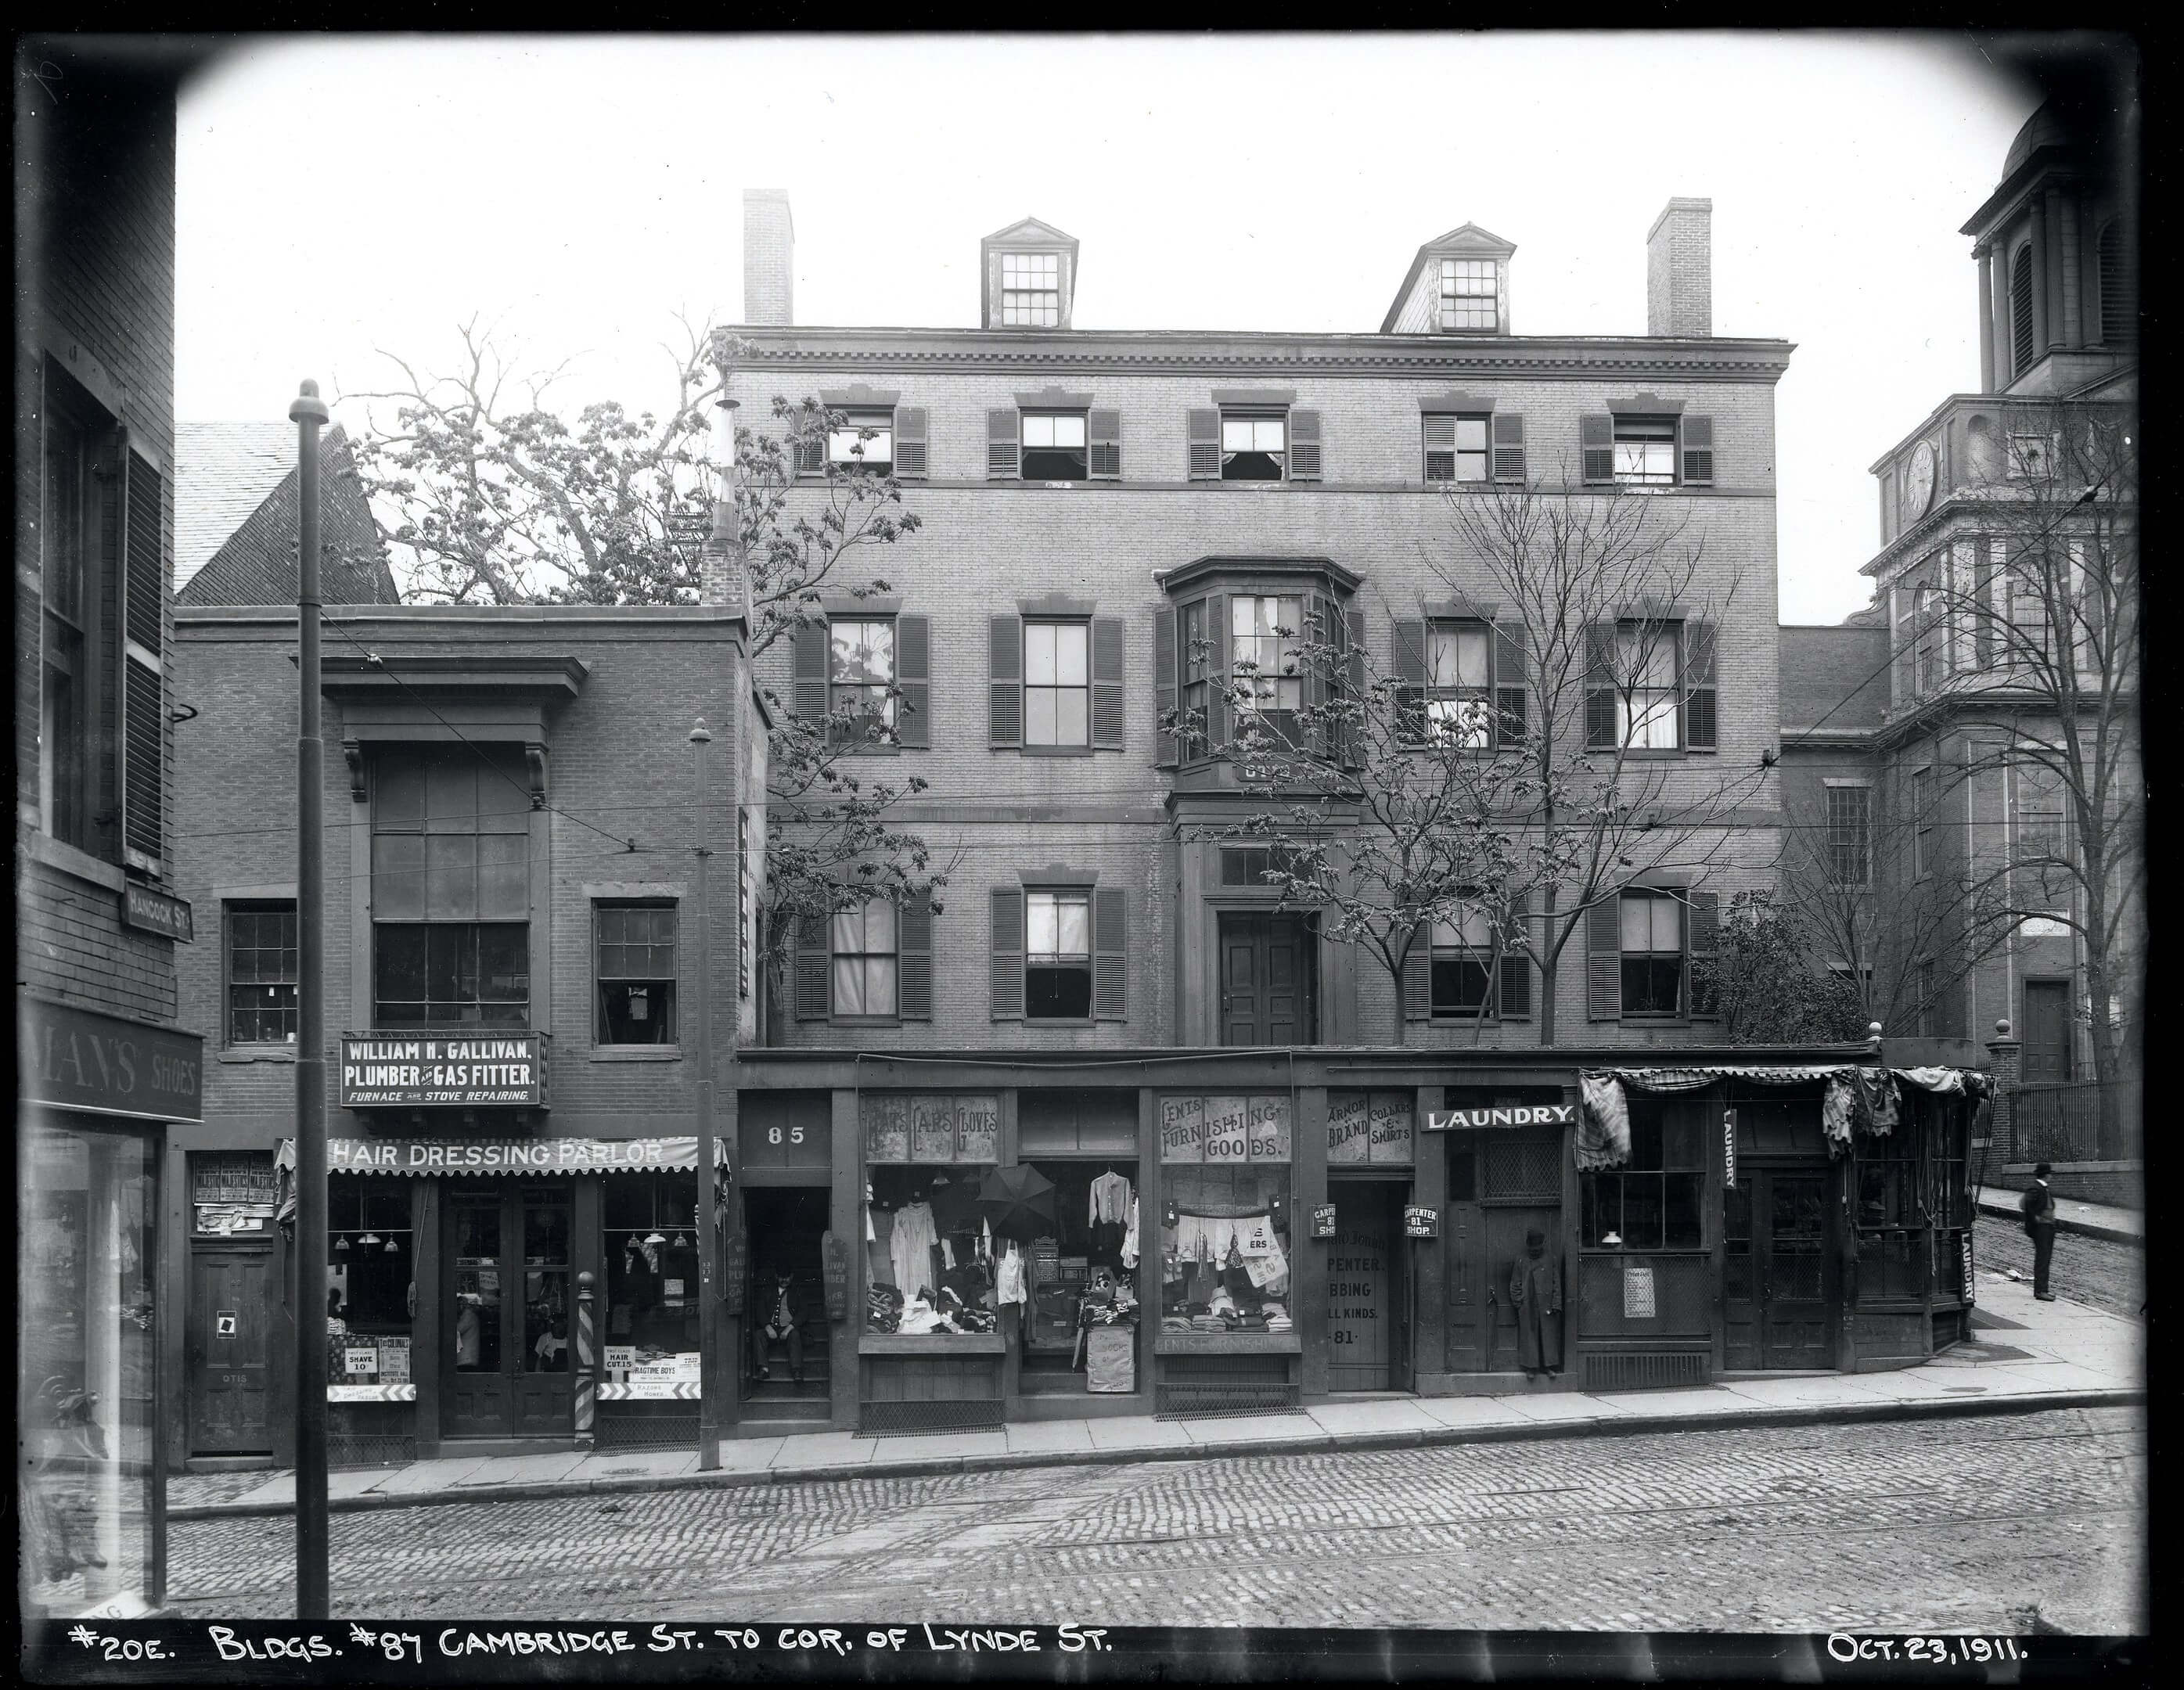 historic B&W photo of a building in boston